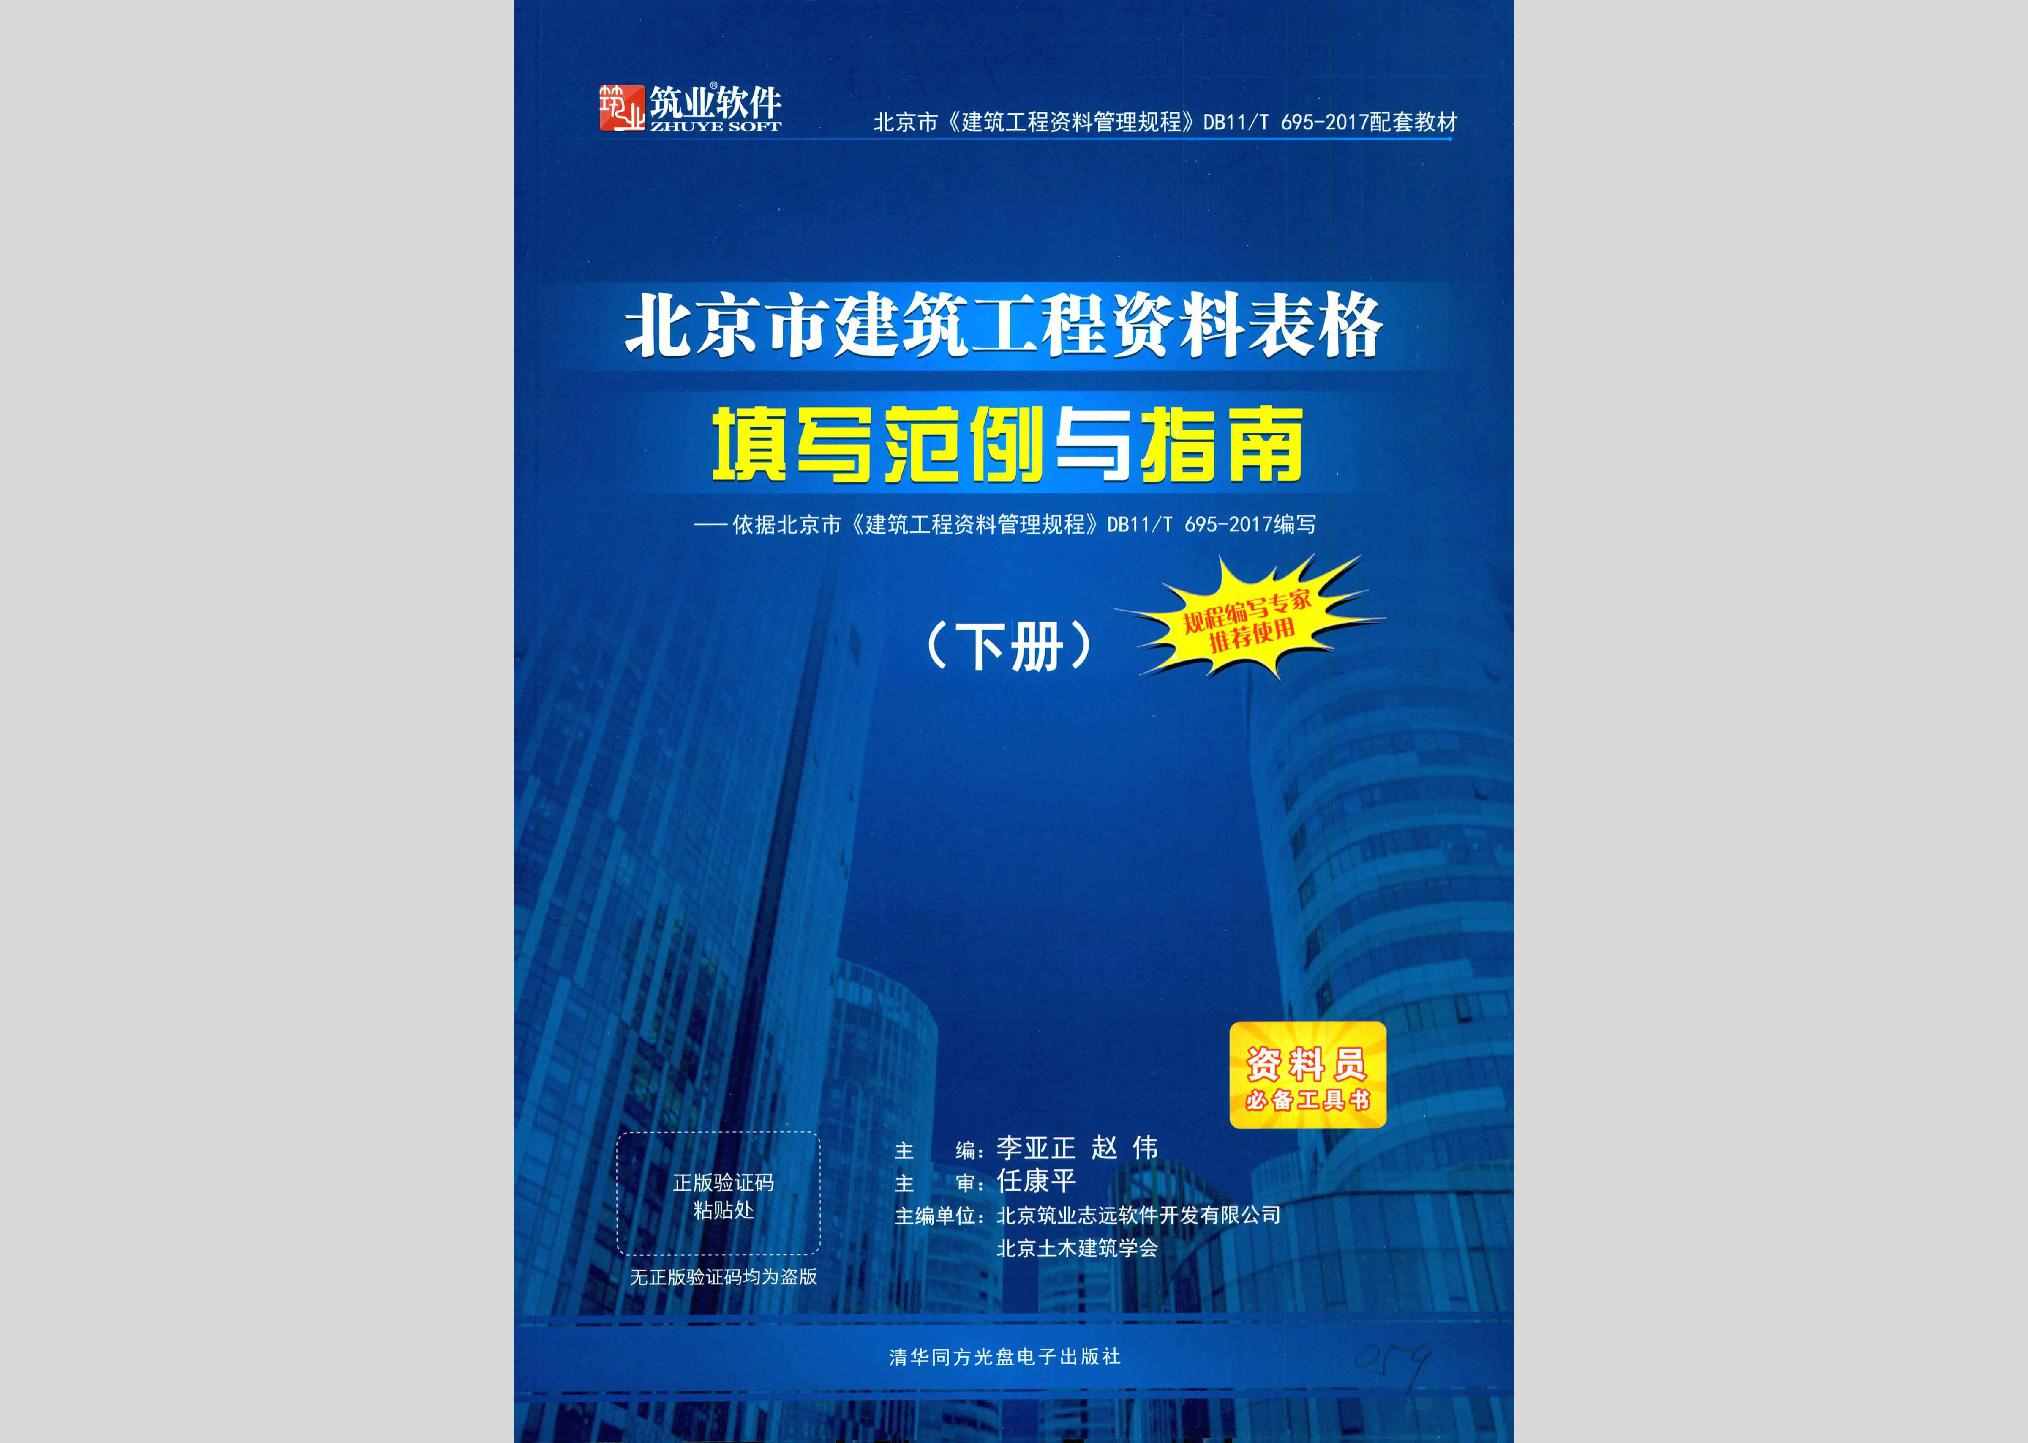 BJJZGCZL-X：北京市建筑工程资料表格填写范例与指南（下册）——依据北京市《建筑工程资料管理规程》DB11/T695-2017编写